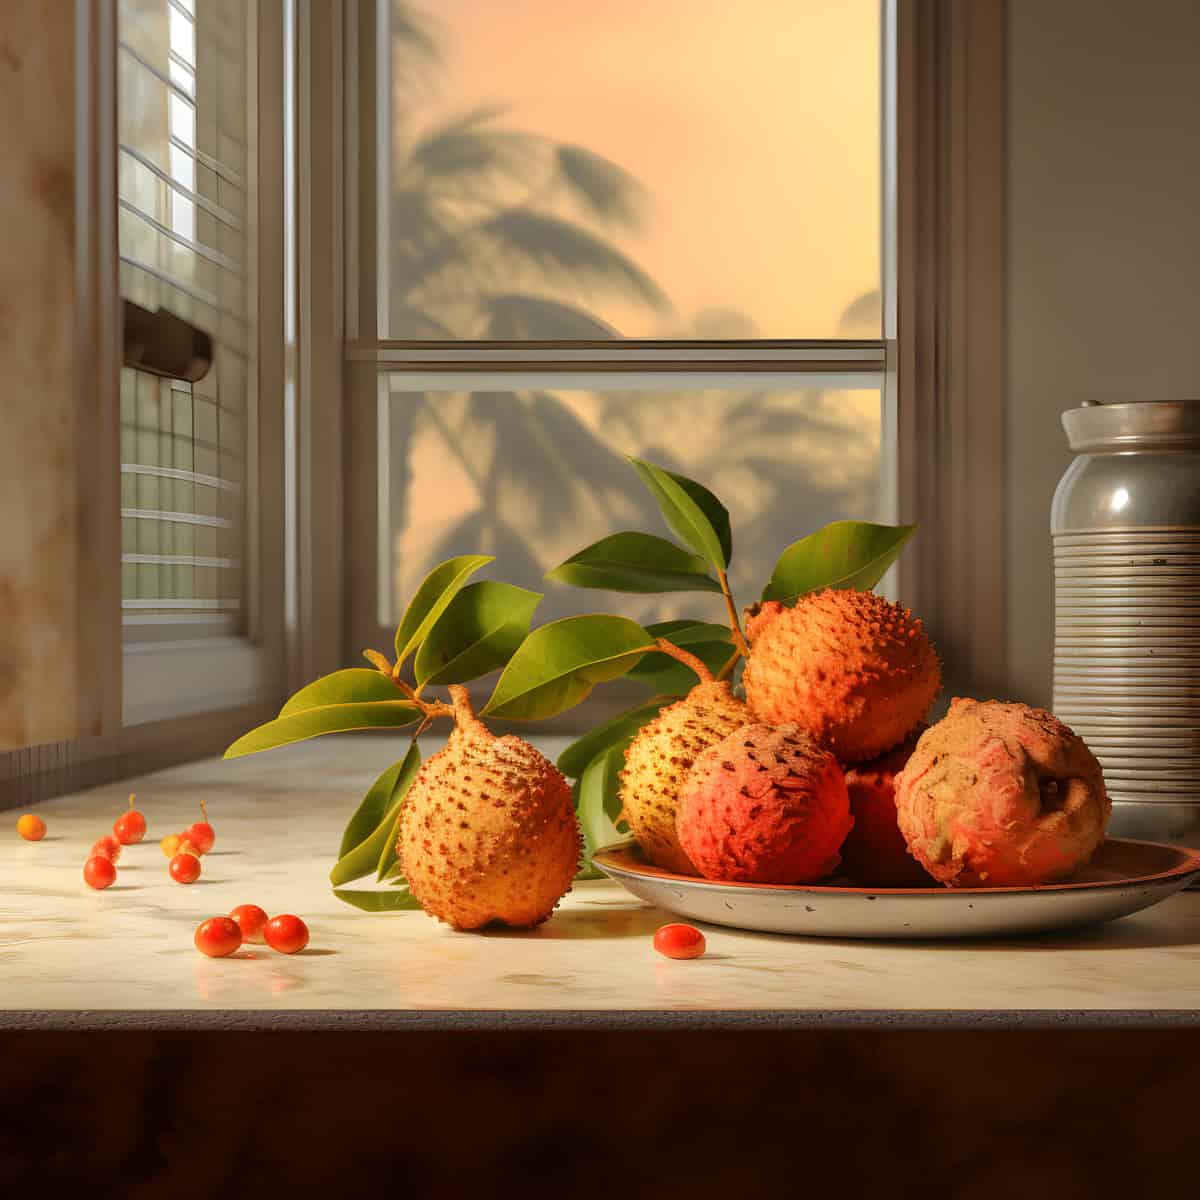 Keledang Fruit on a kitchen counter